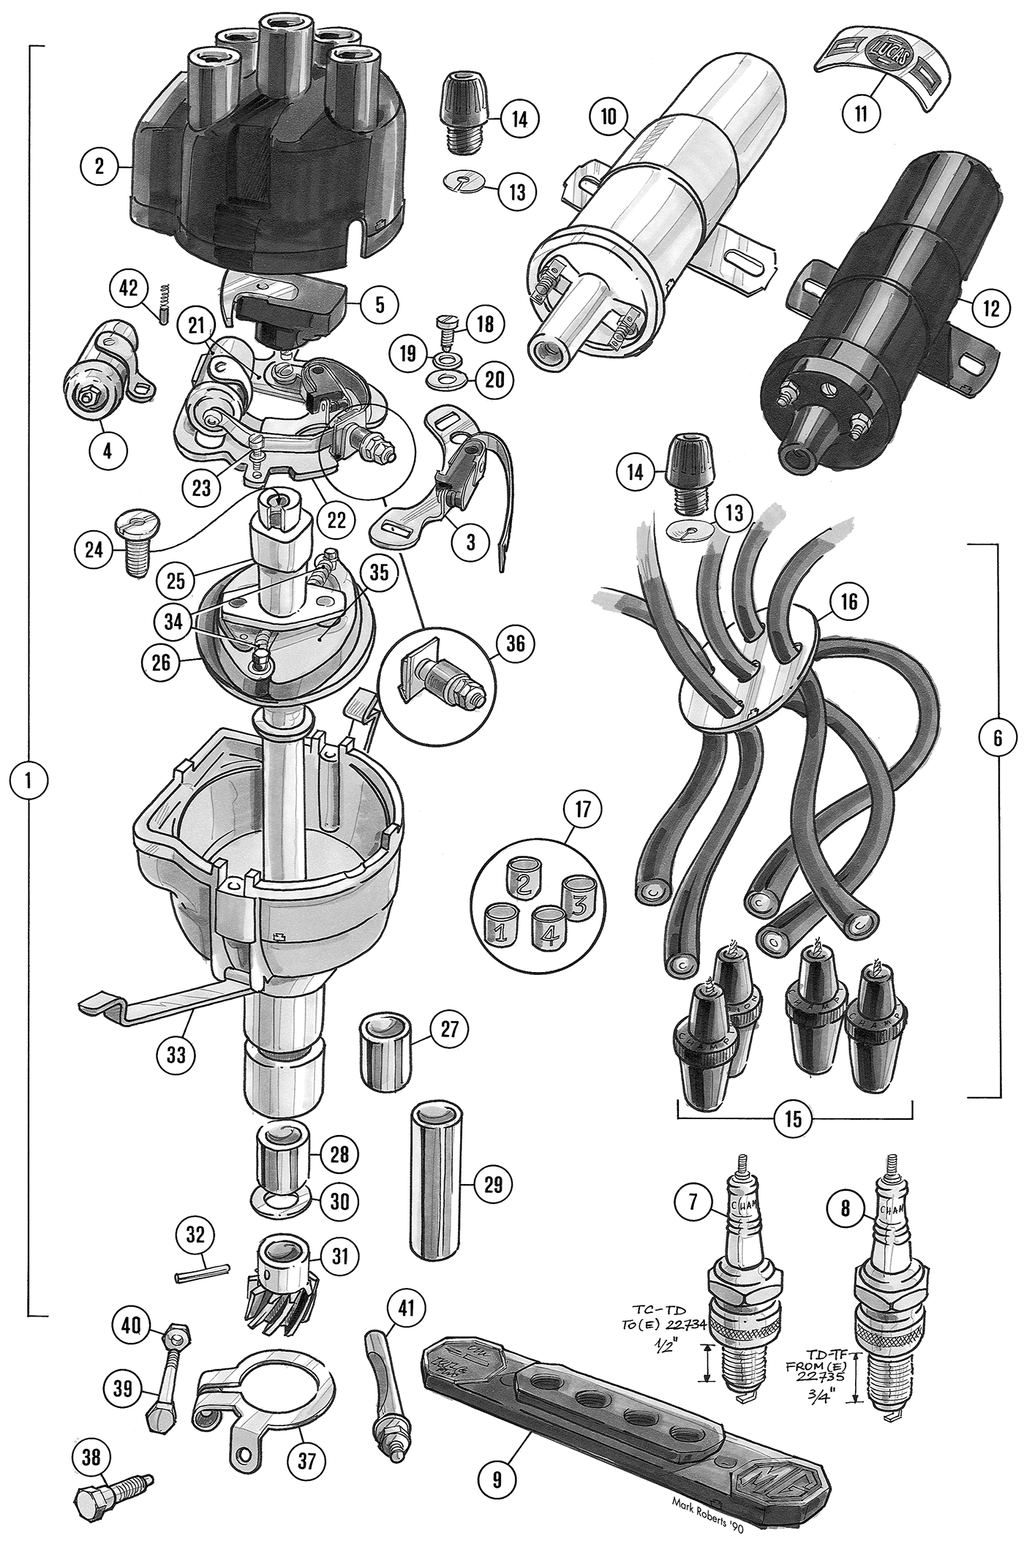 MGTD-TF 1949-1955 - Bobines & modules | Webshop Anglo Parts - 1